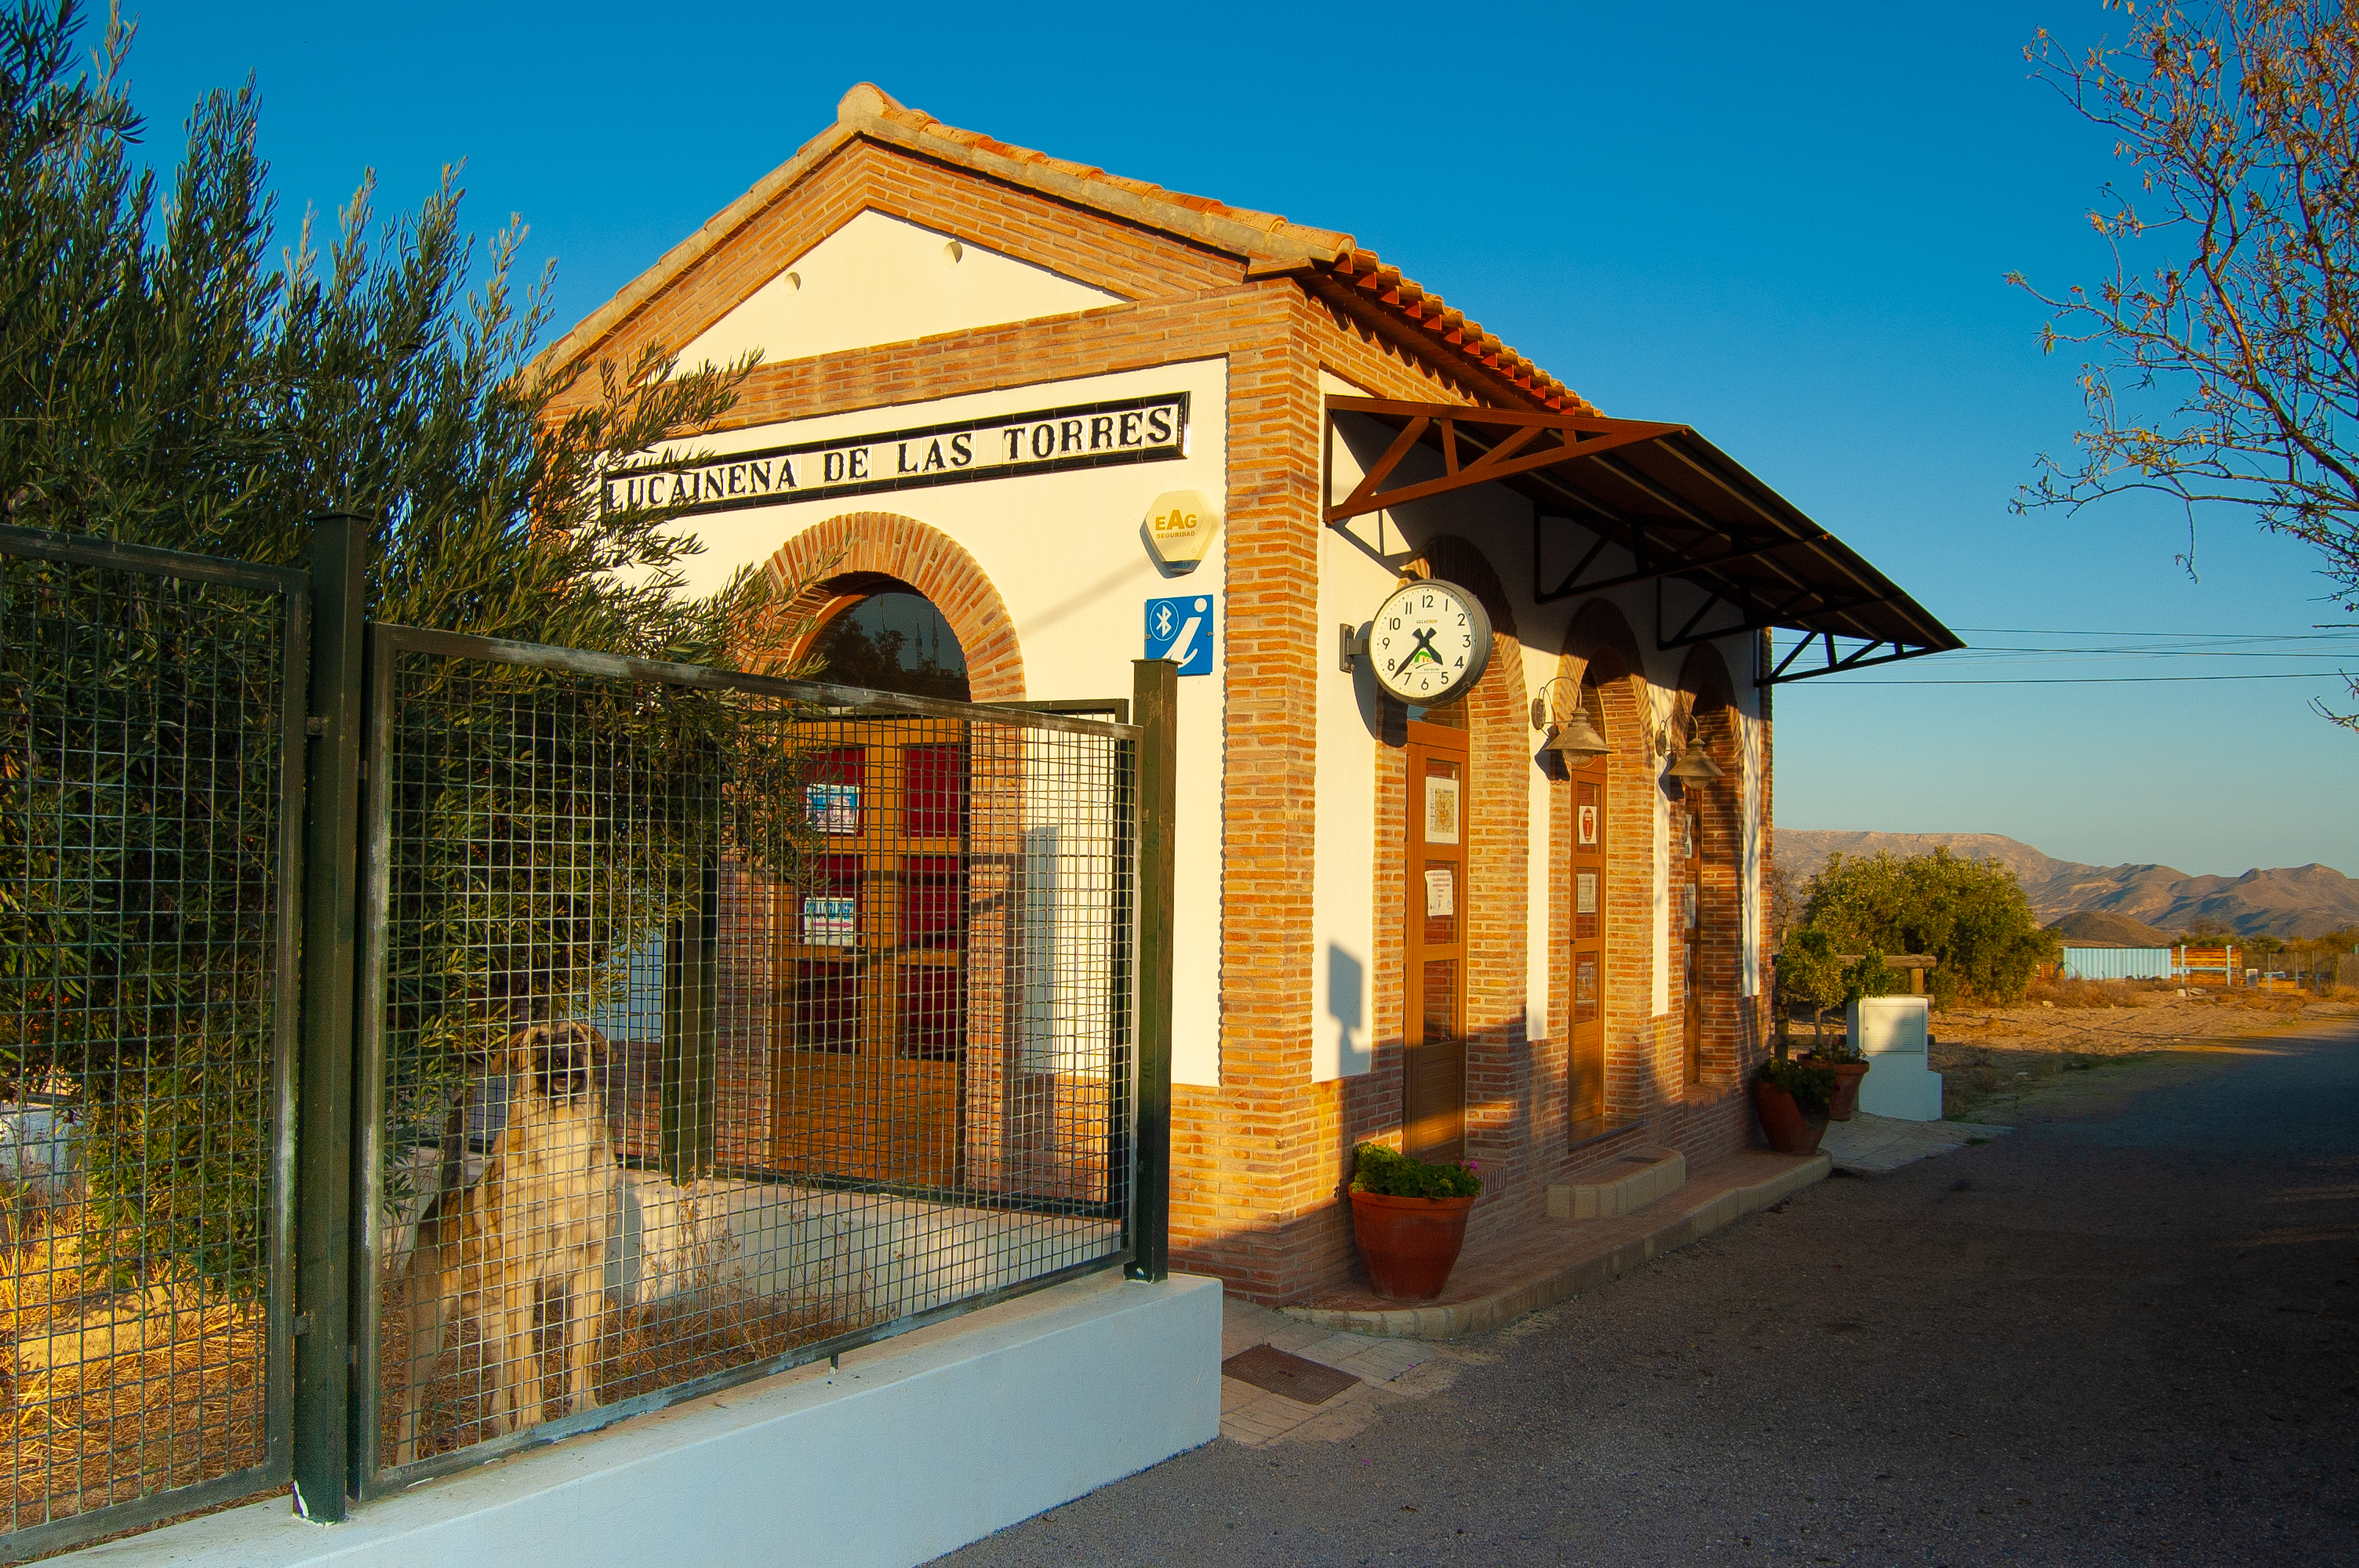 The old Lucainena de las Torres train station